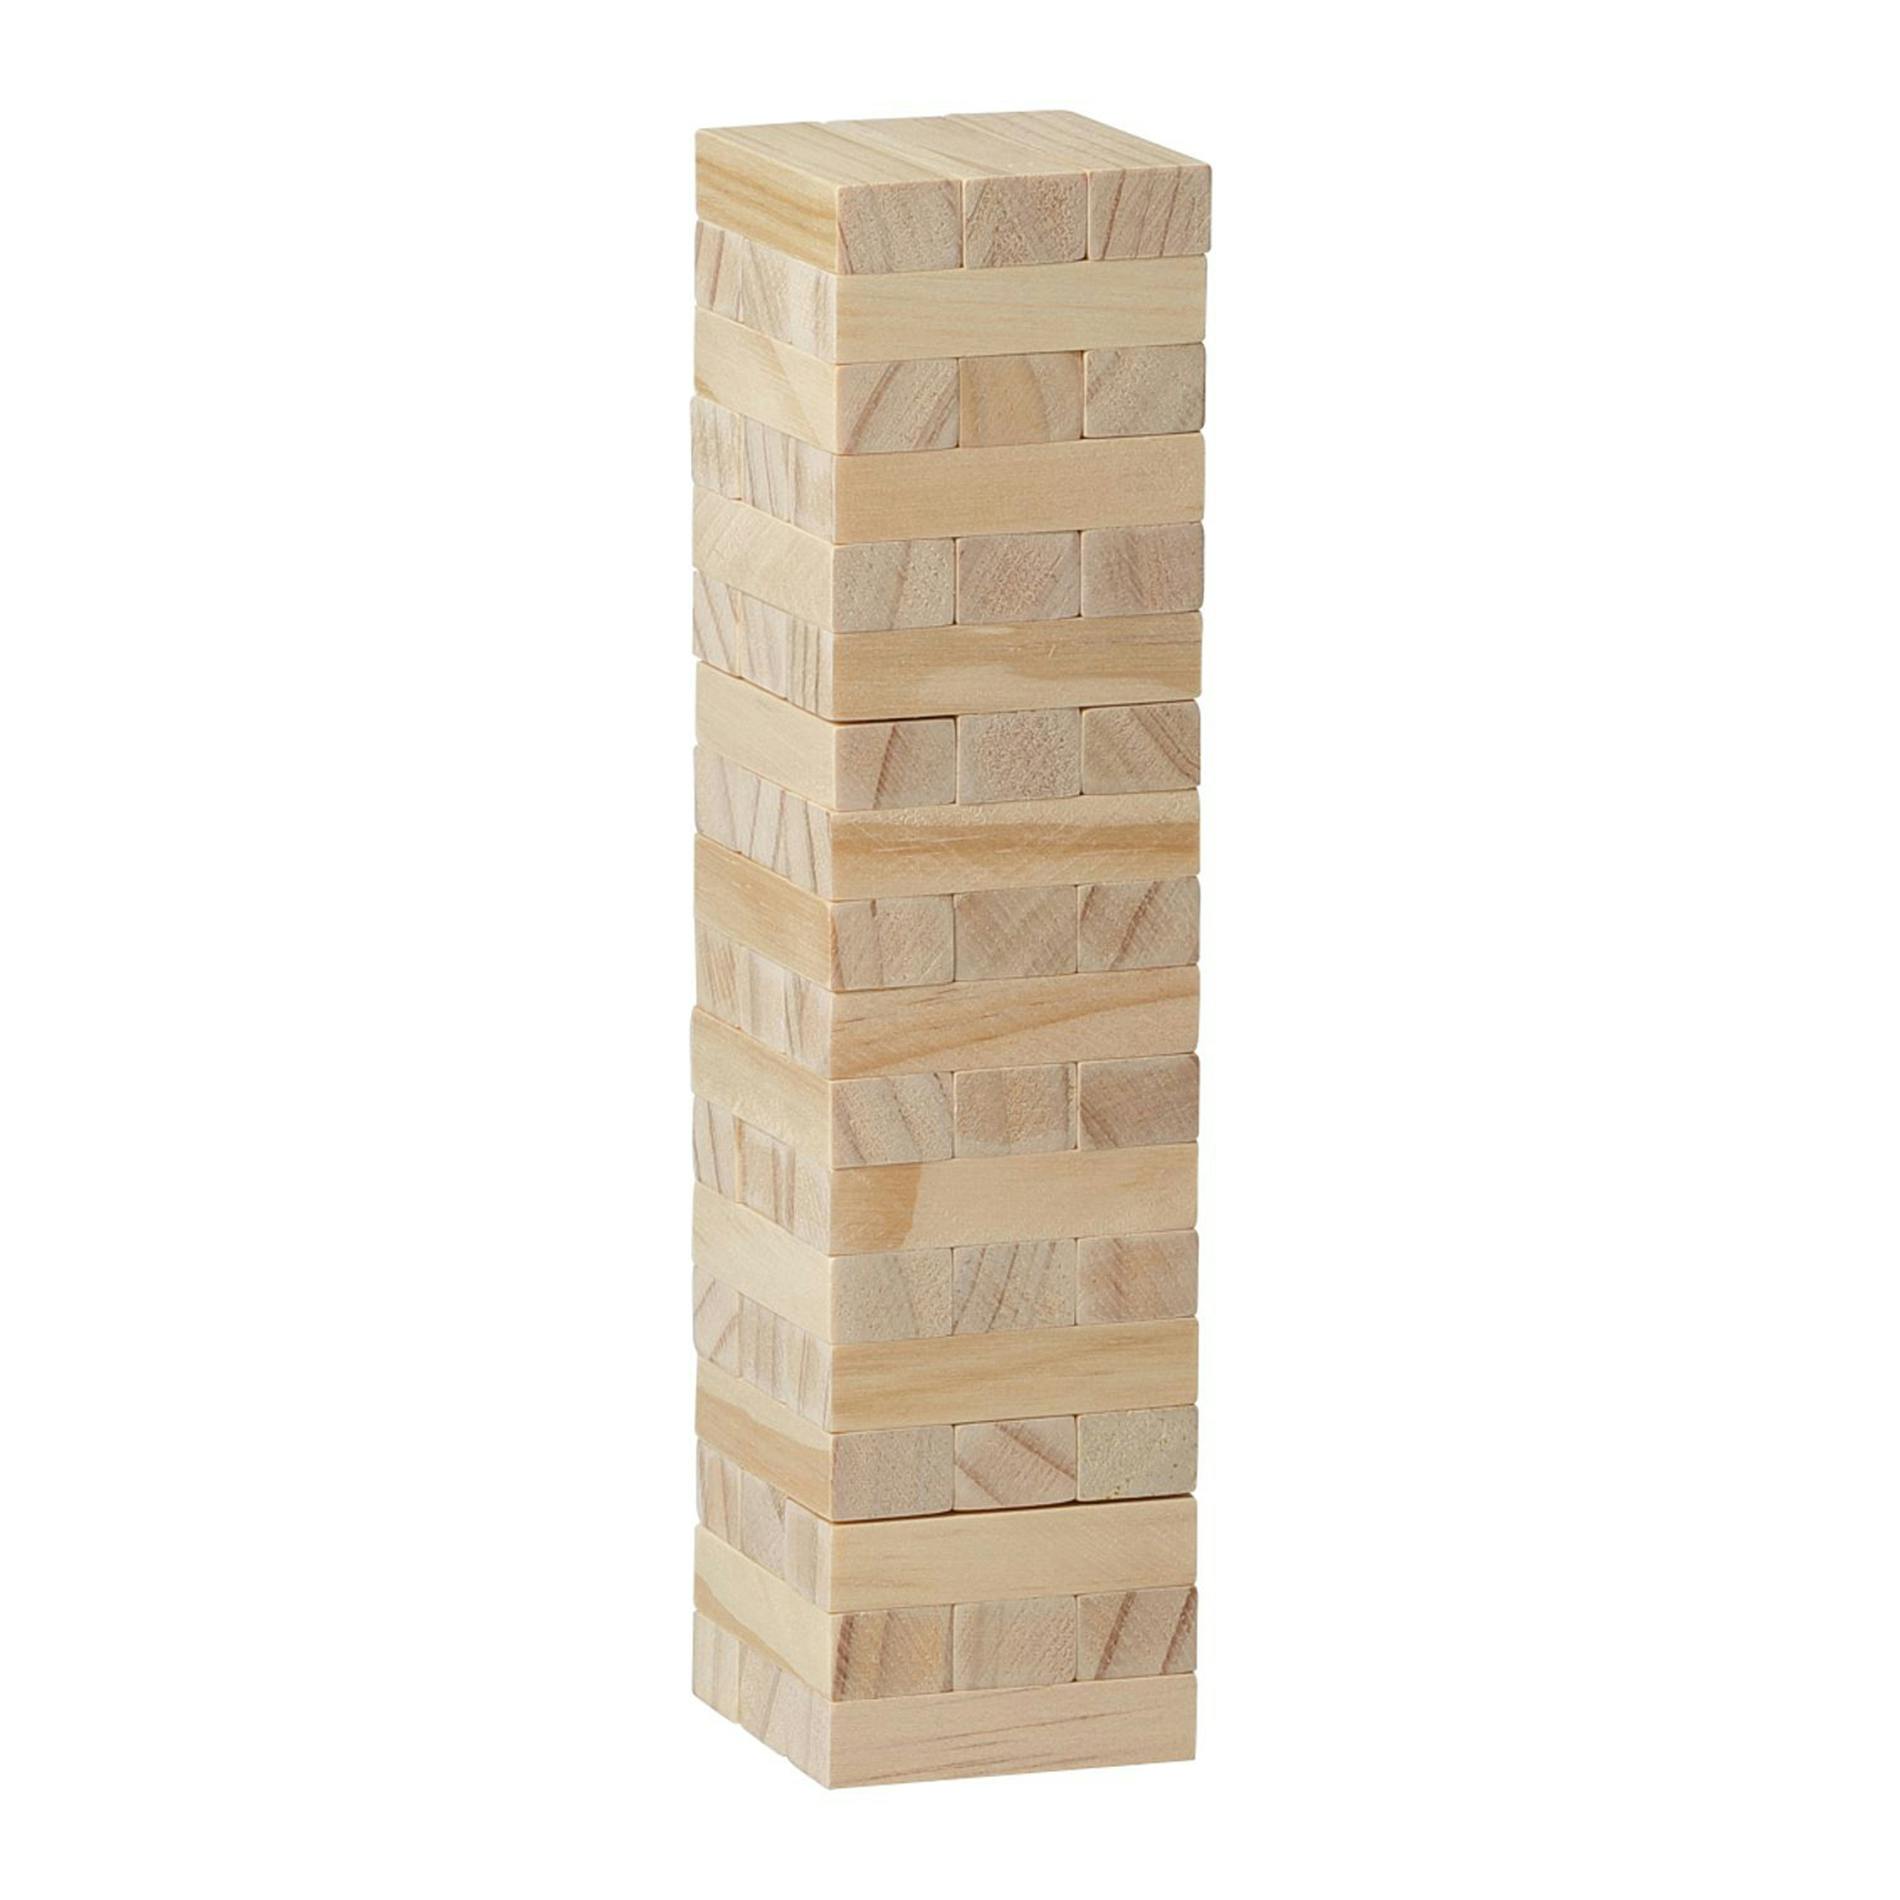 Tumbling Tower Wood Block Stacking Game - additional Image 1